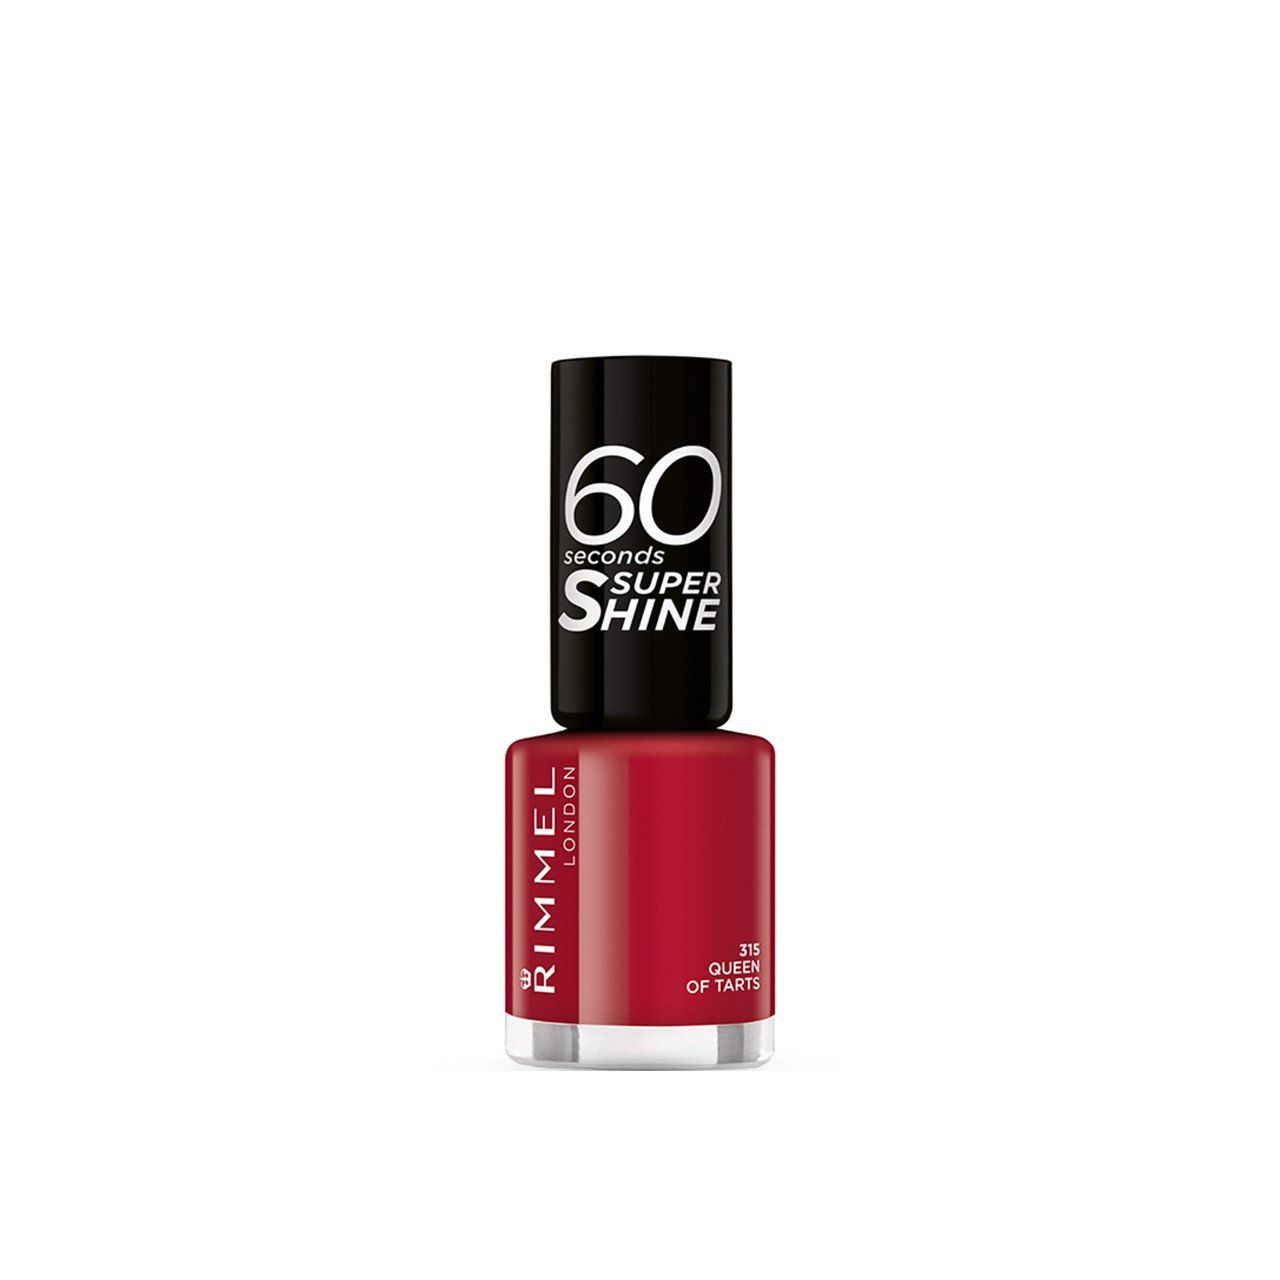 Rimmel London 60 Seconds Super Shine Nail Polish 315 8ml (0.27fl oz)